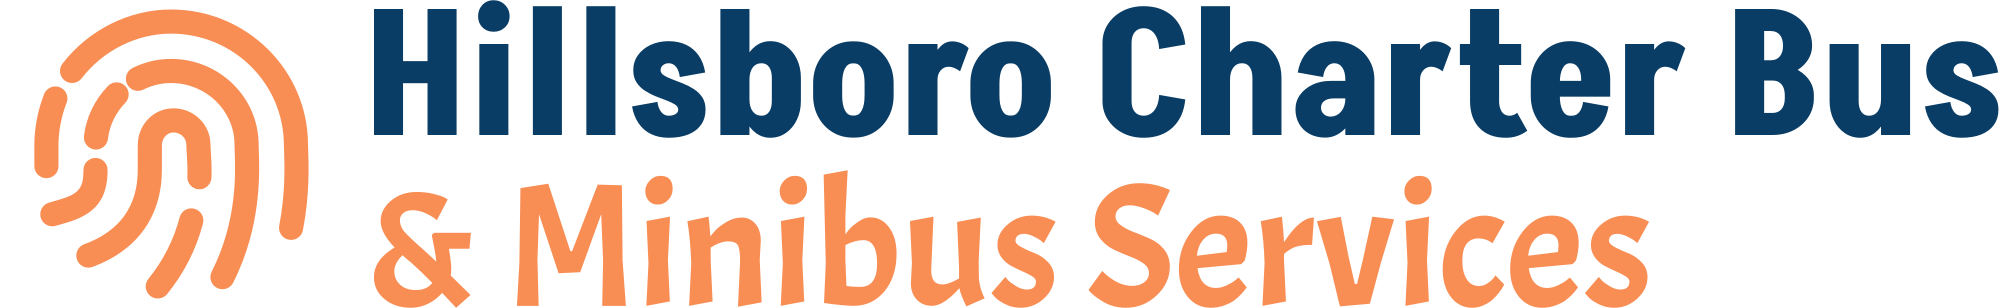 Charter Bus Company Hillsboro logo